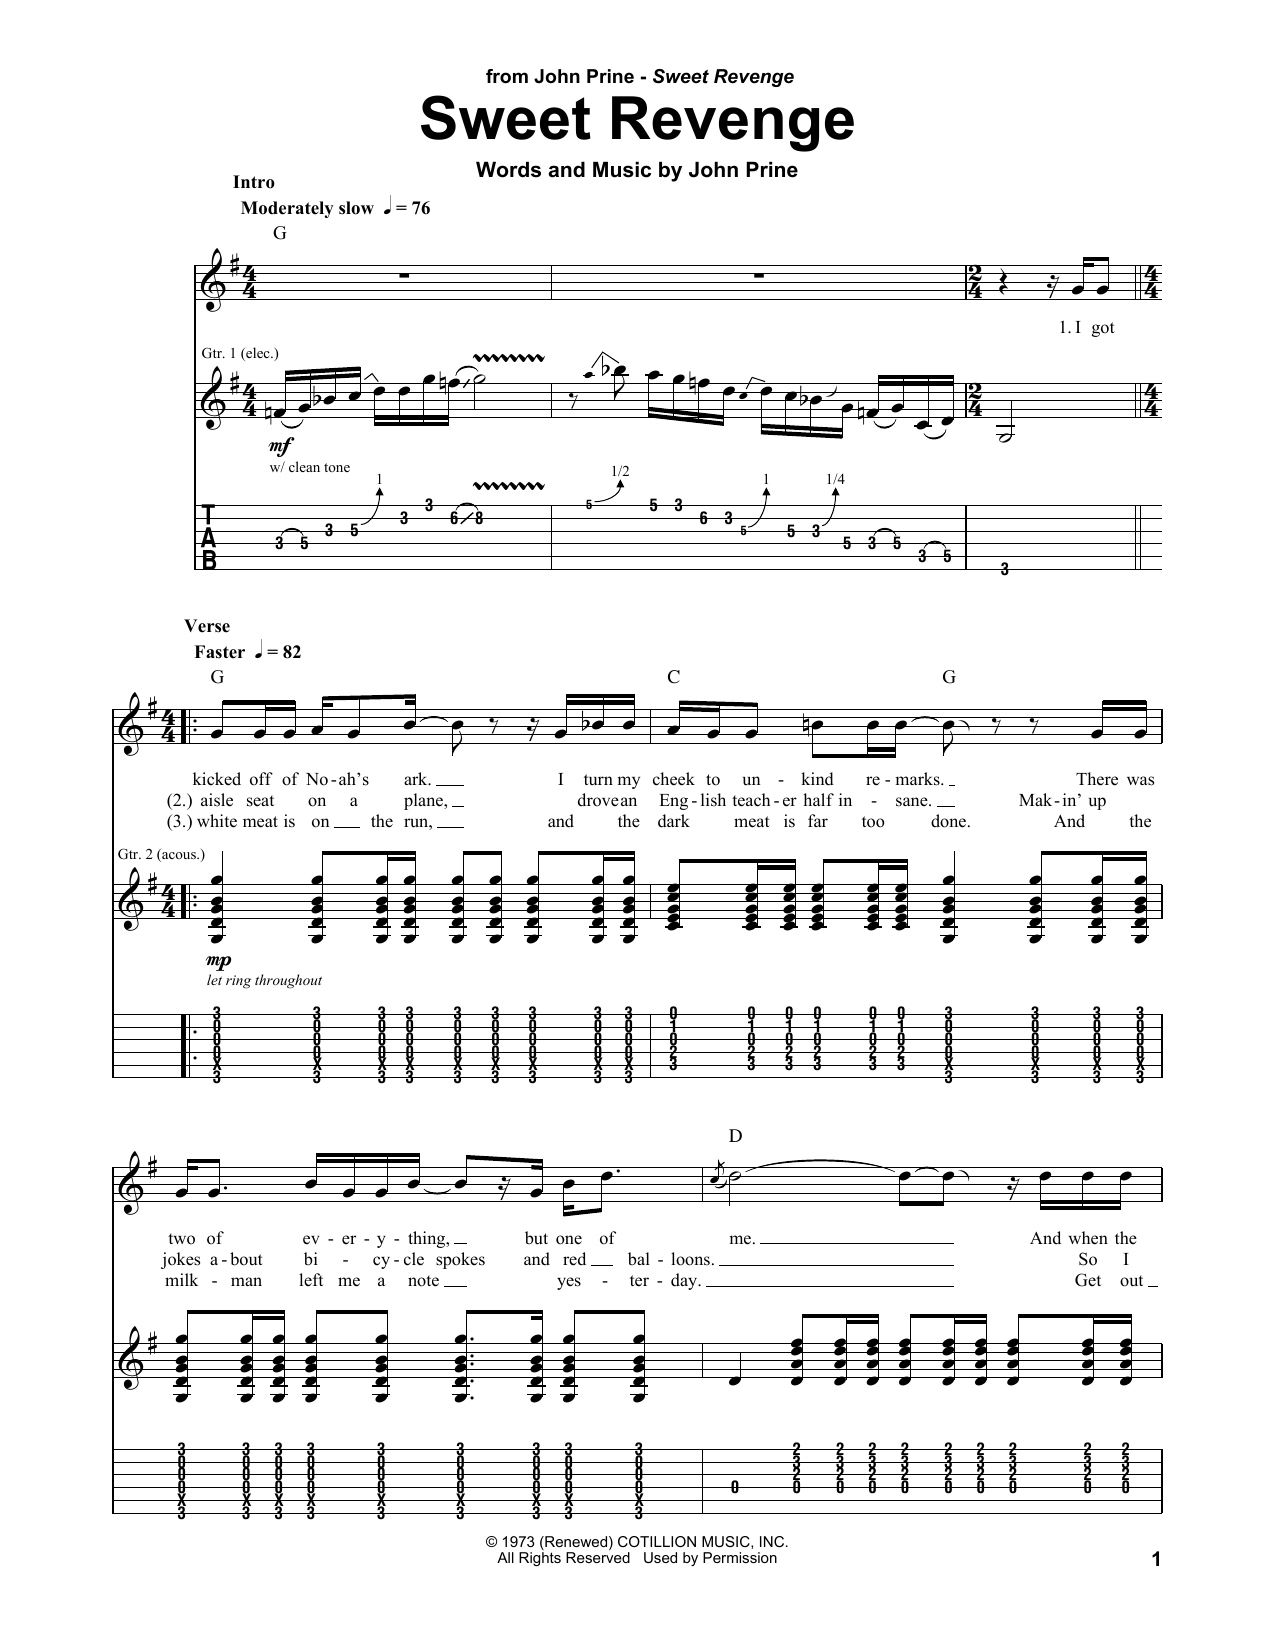 John Prine Sweet Revenge Sheet Music Notes & Chords for Ukulele - Download or Print PDF